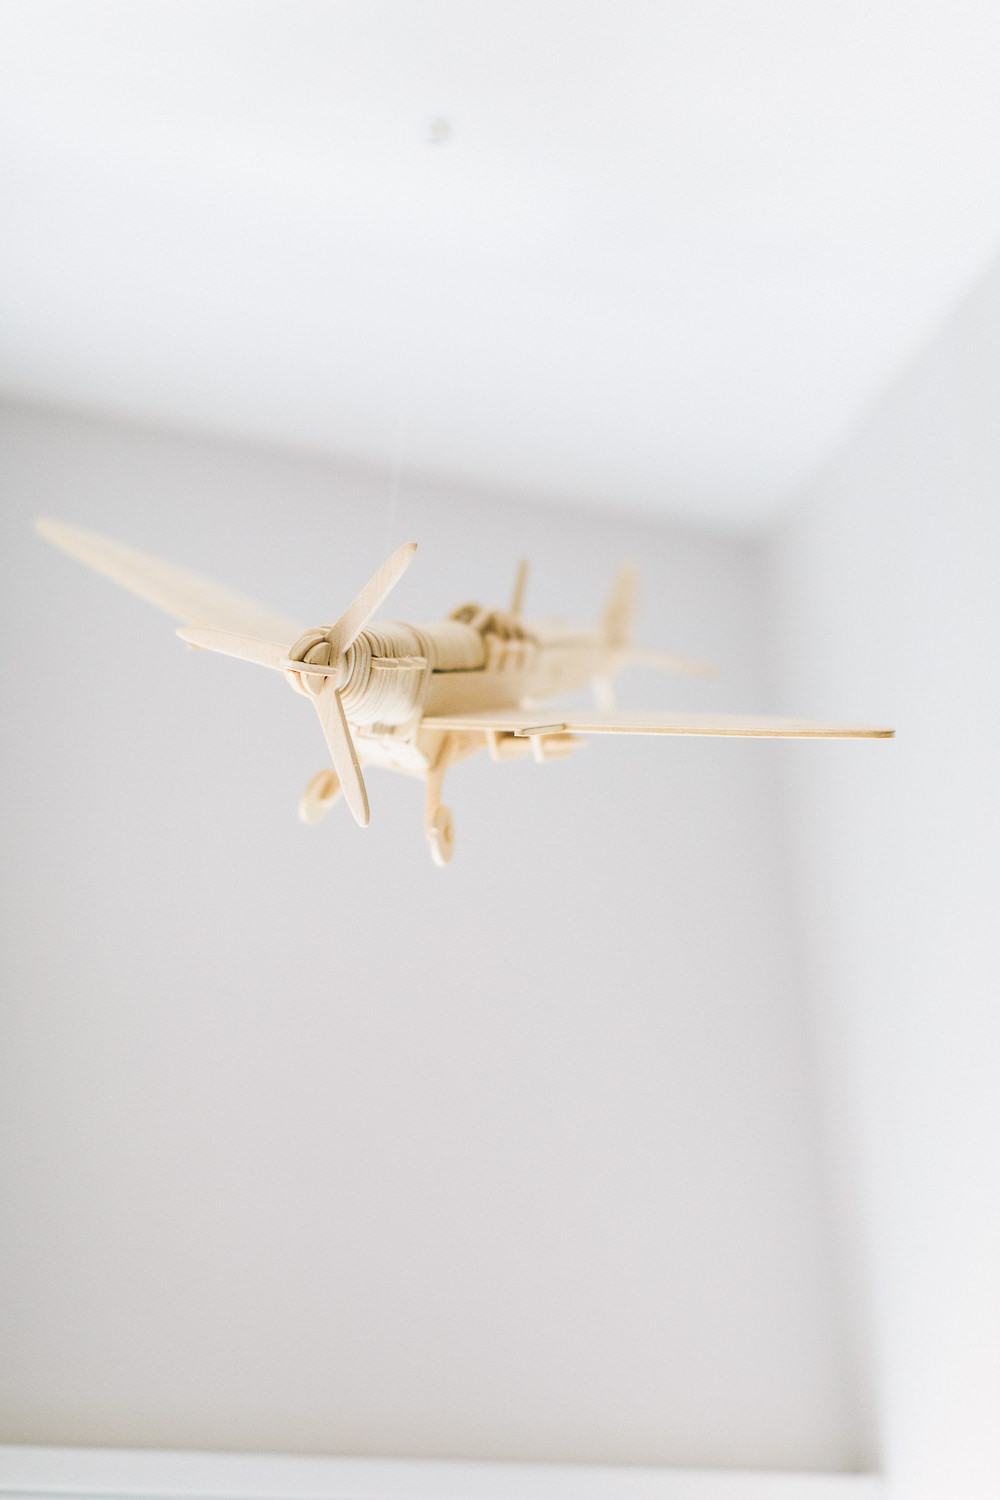 Plywood model aeroplane